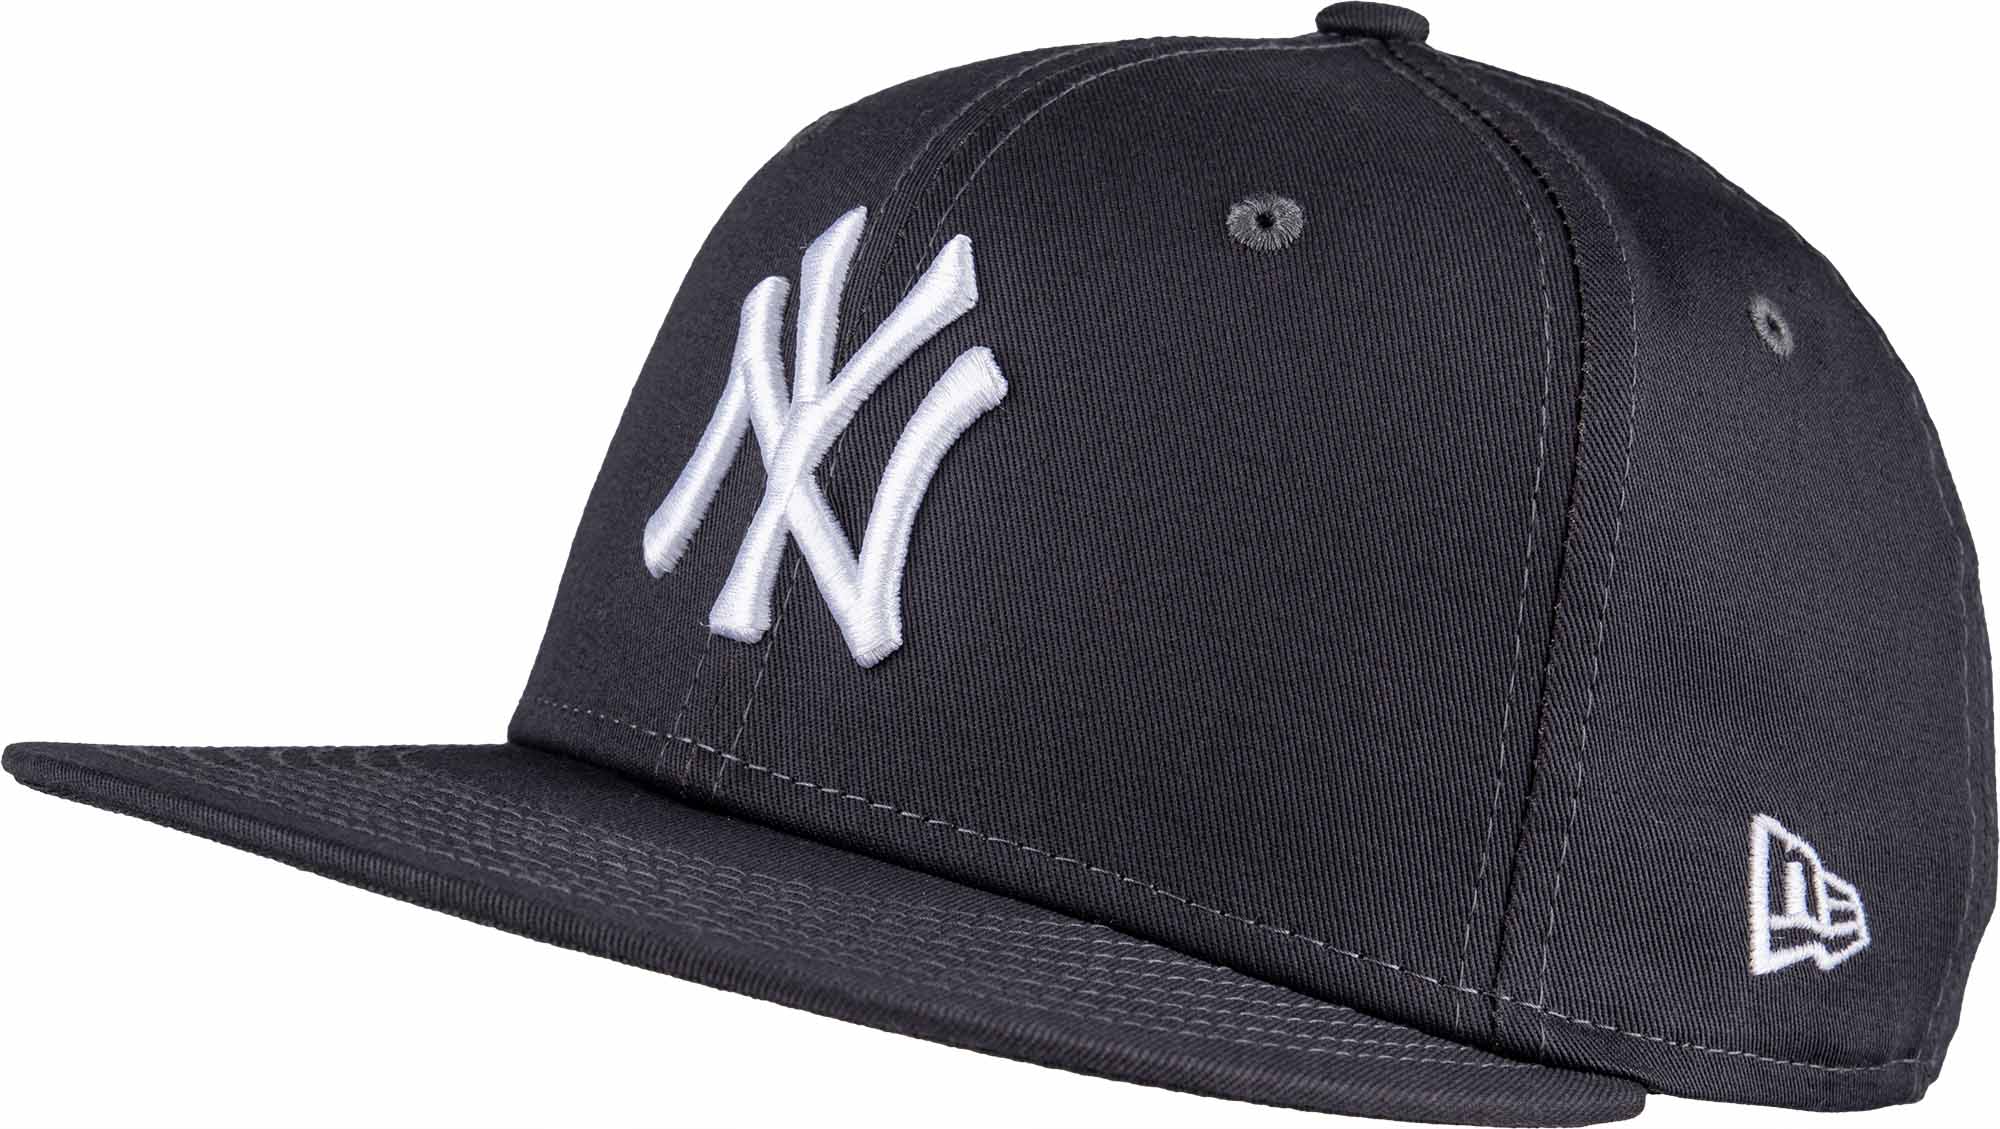 Men's baseball cap